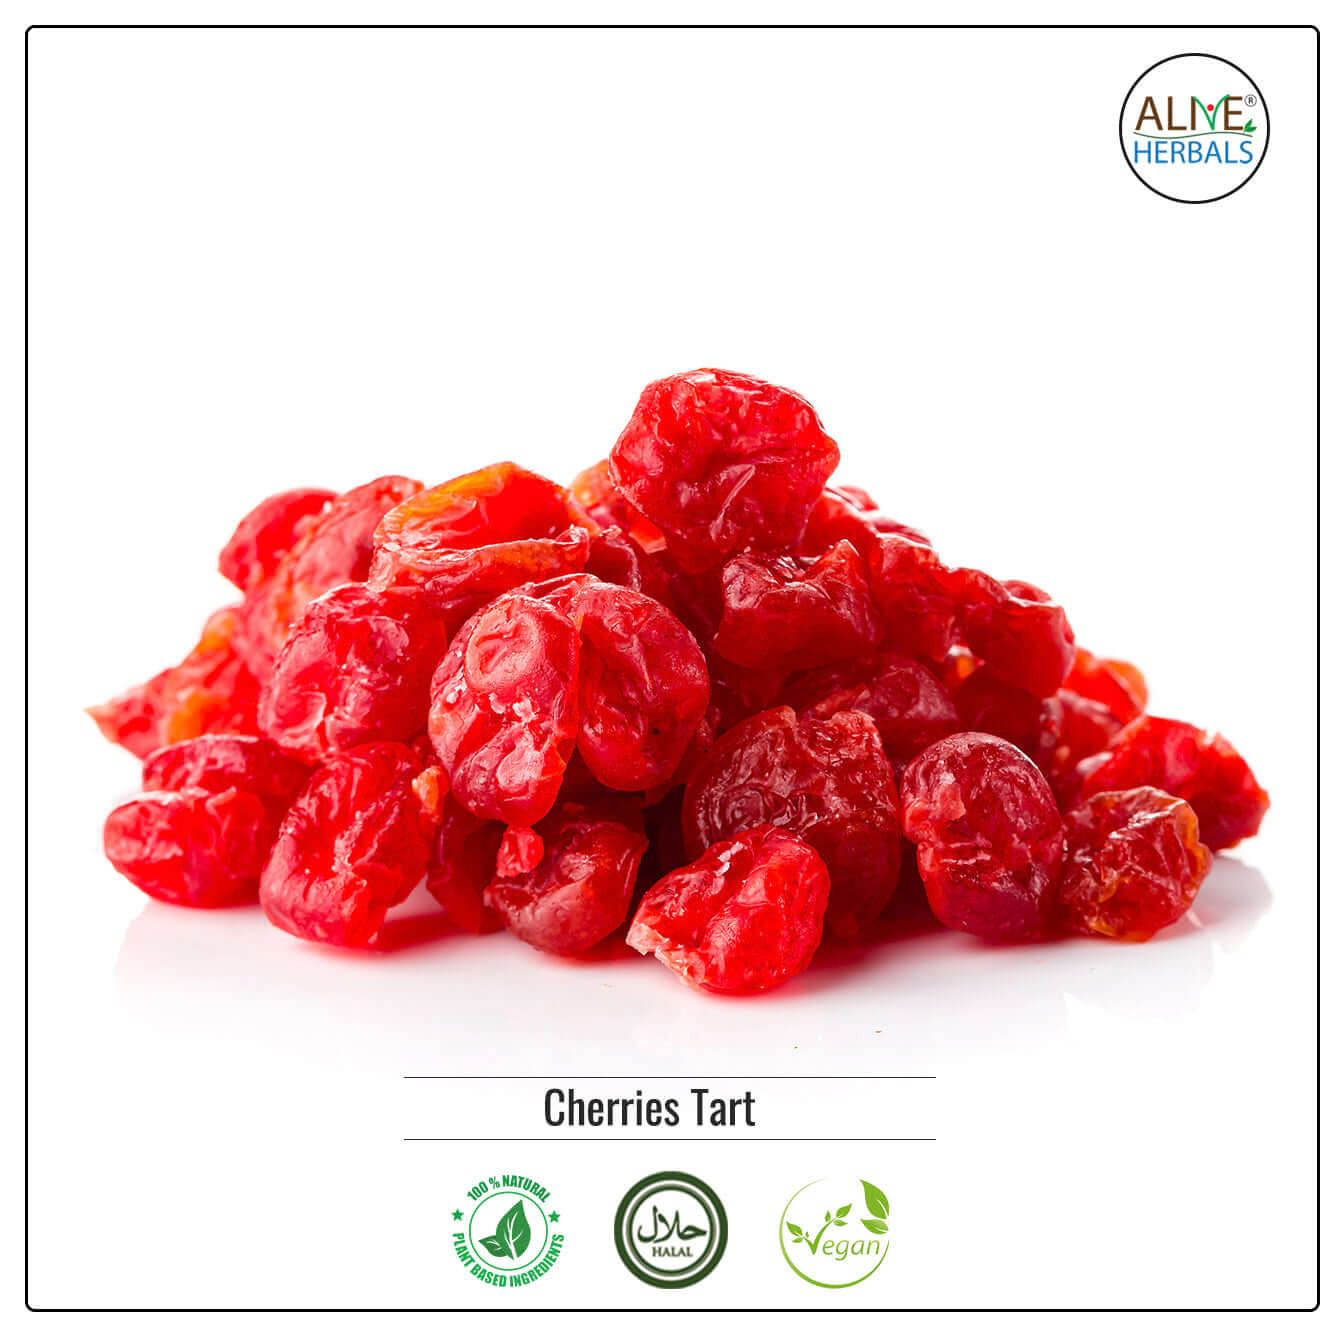 Dried tart cherries - Buy at Natural Food Store | Alive Herbals.